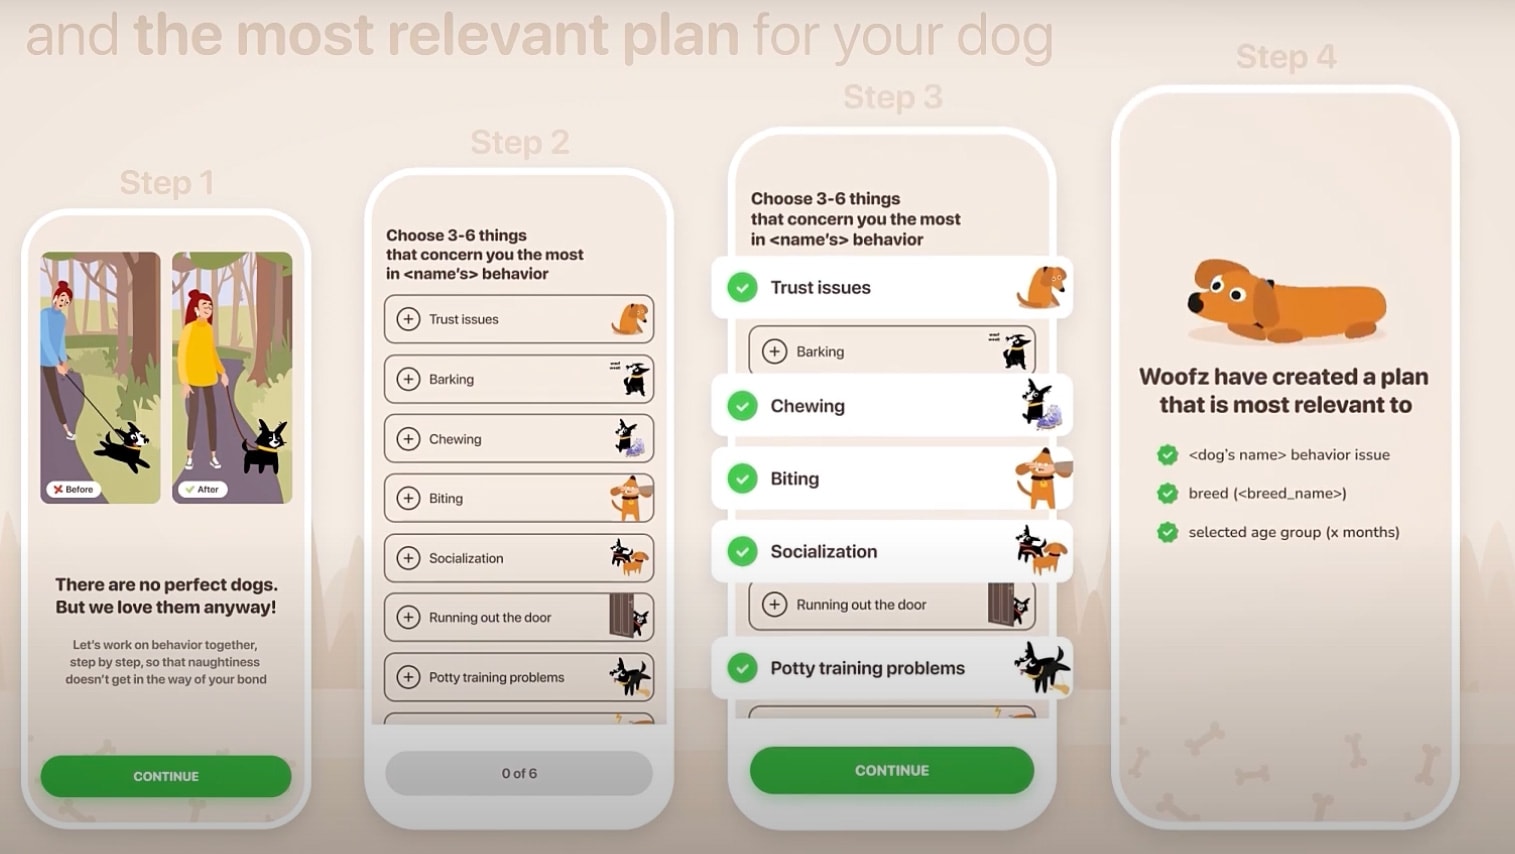 woofz dog training app - related plan